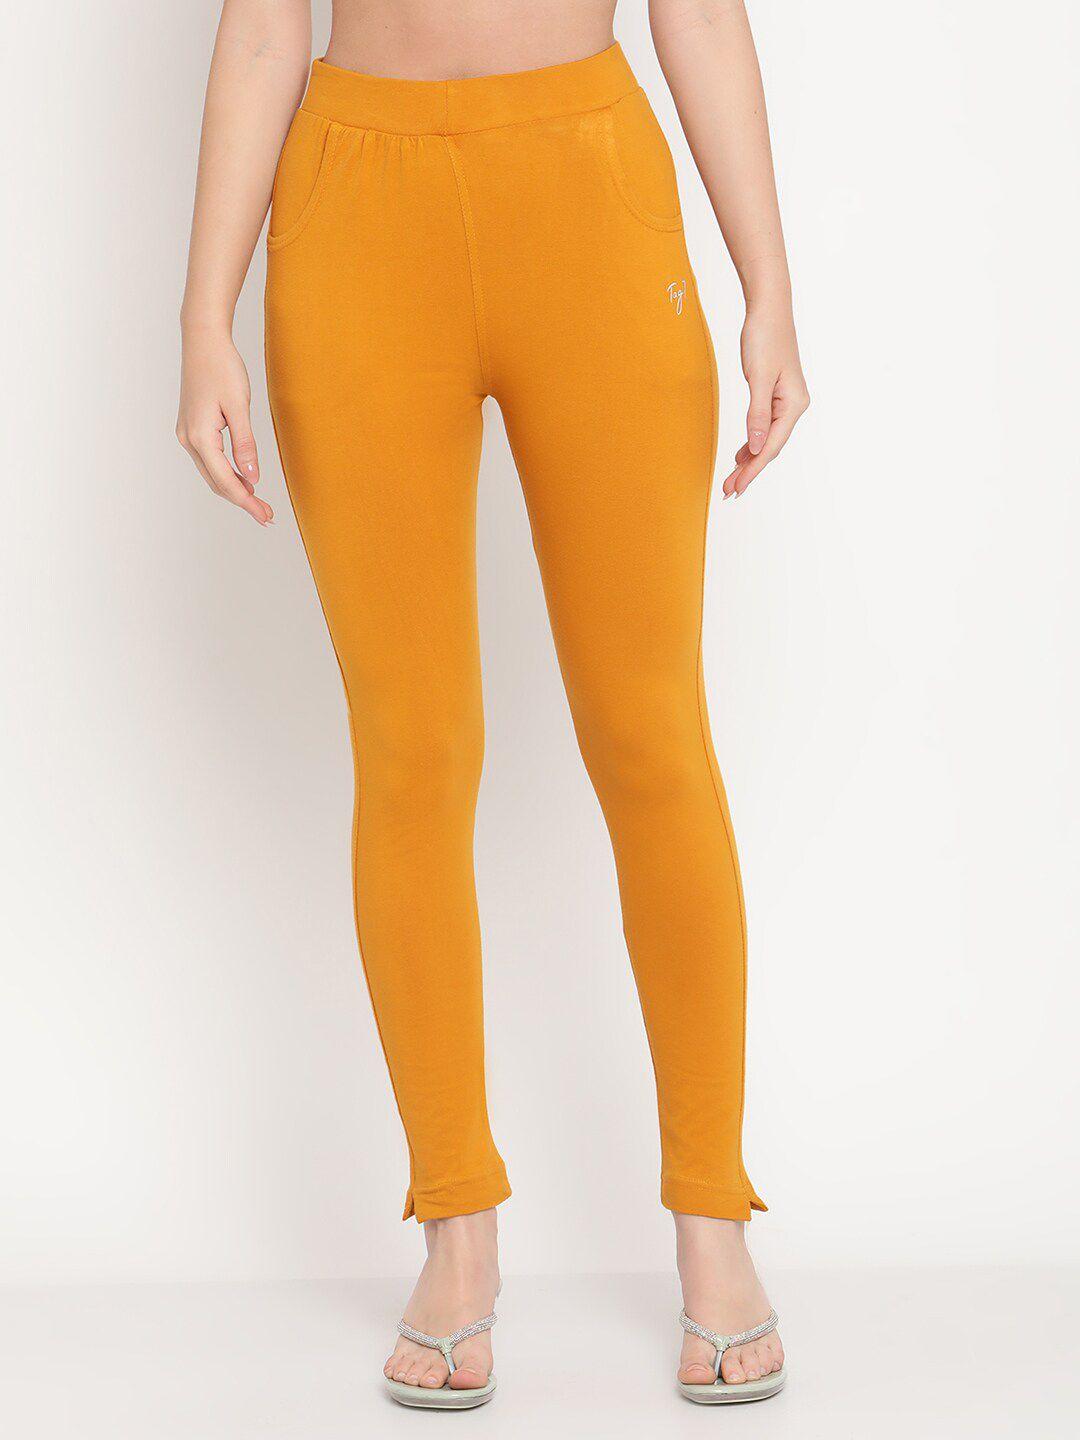 tag-7-women-mustard-yellow-solid-leggings